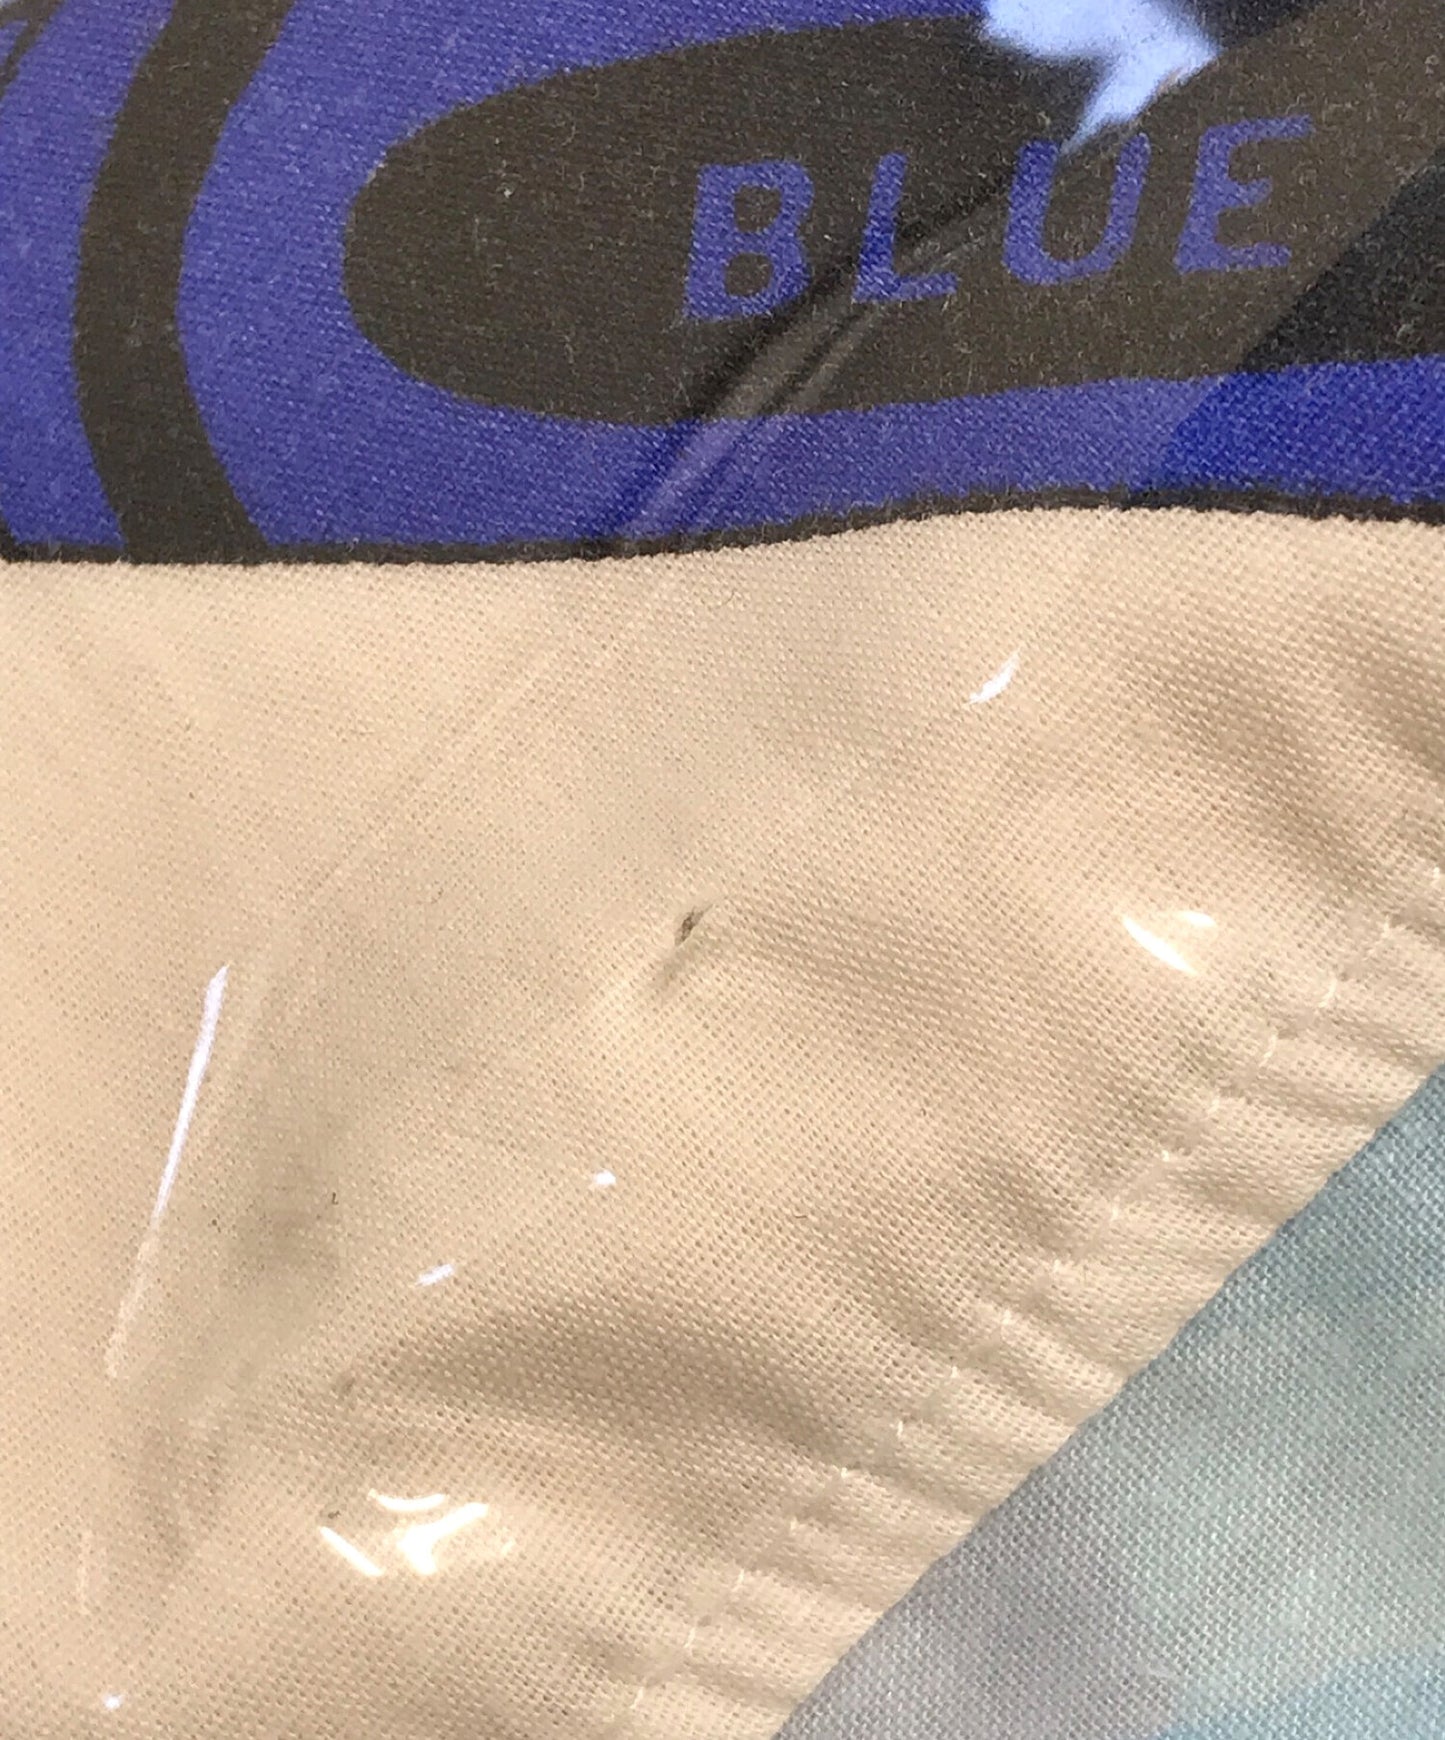 Comme des Garcons 셔츠 PVC Clear Tote Bag W26611